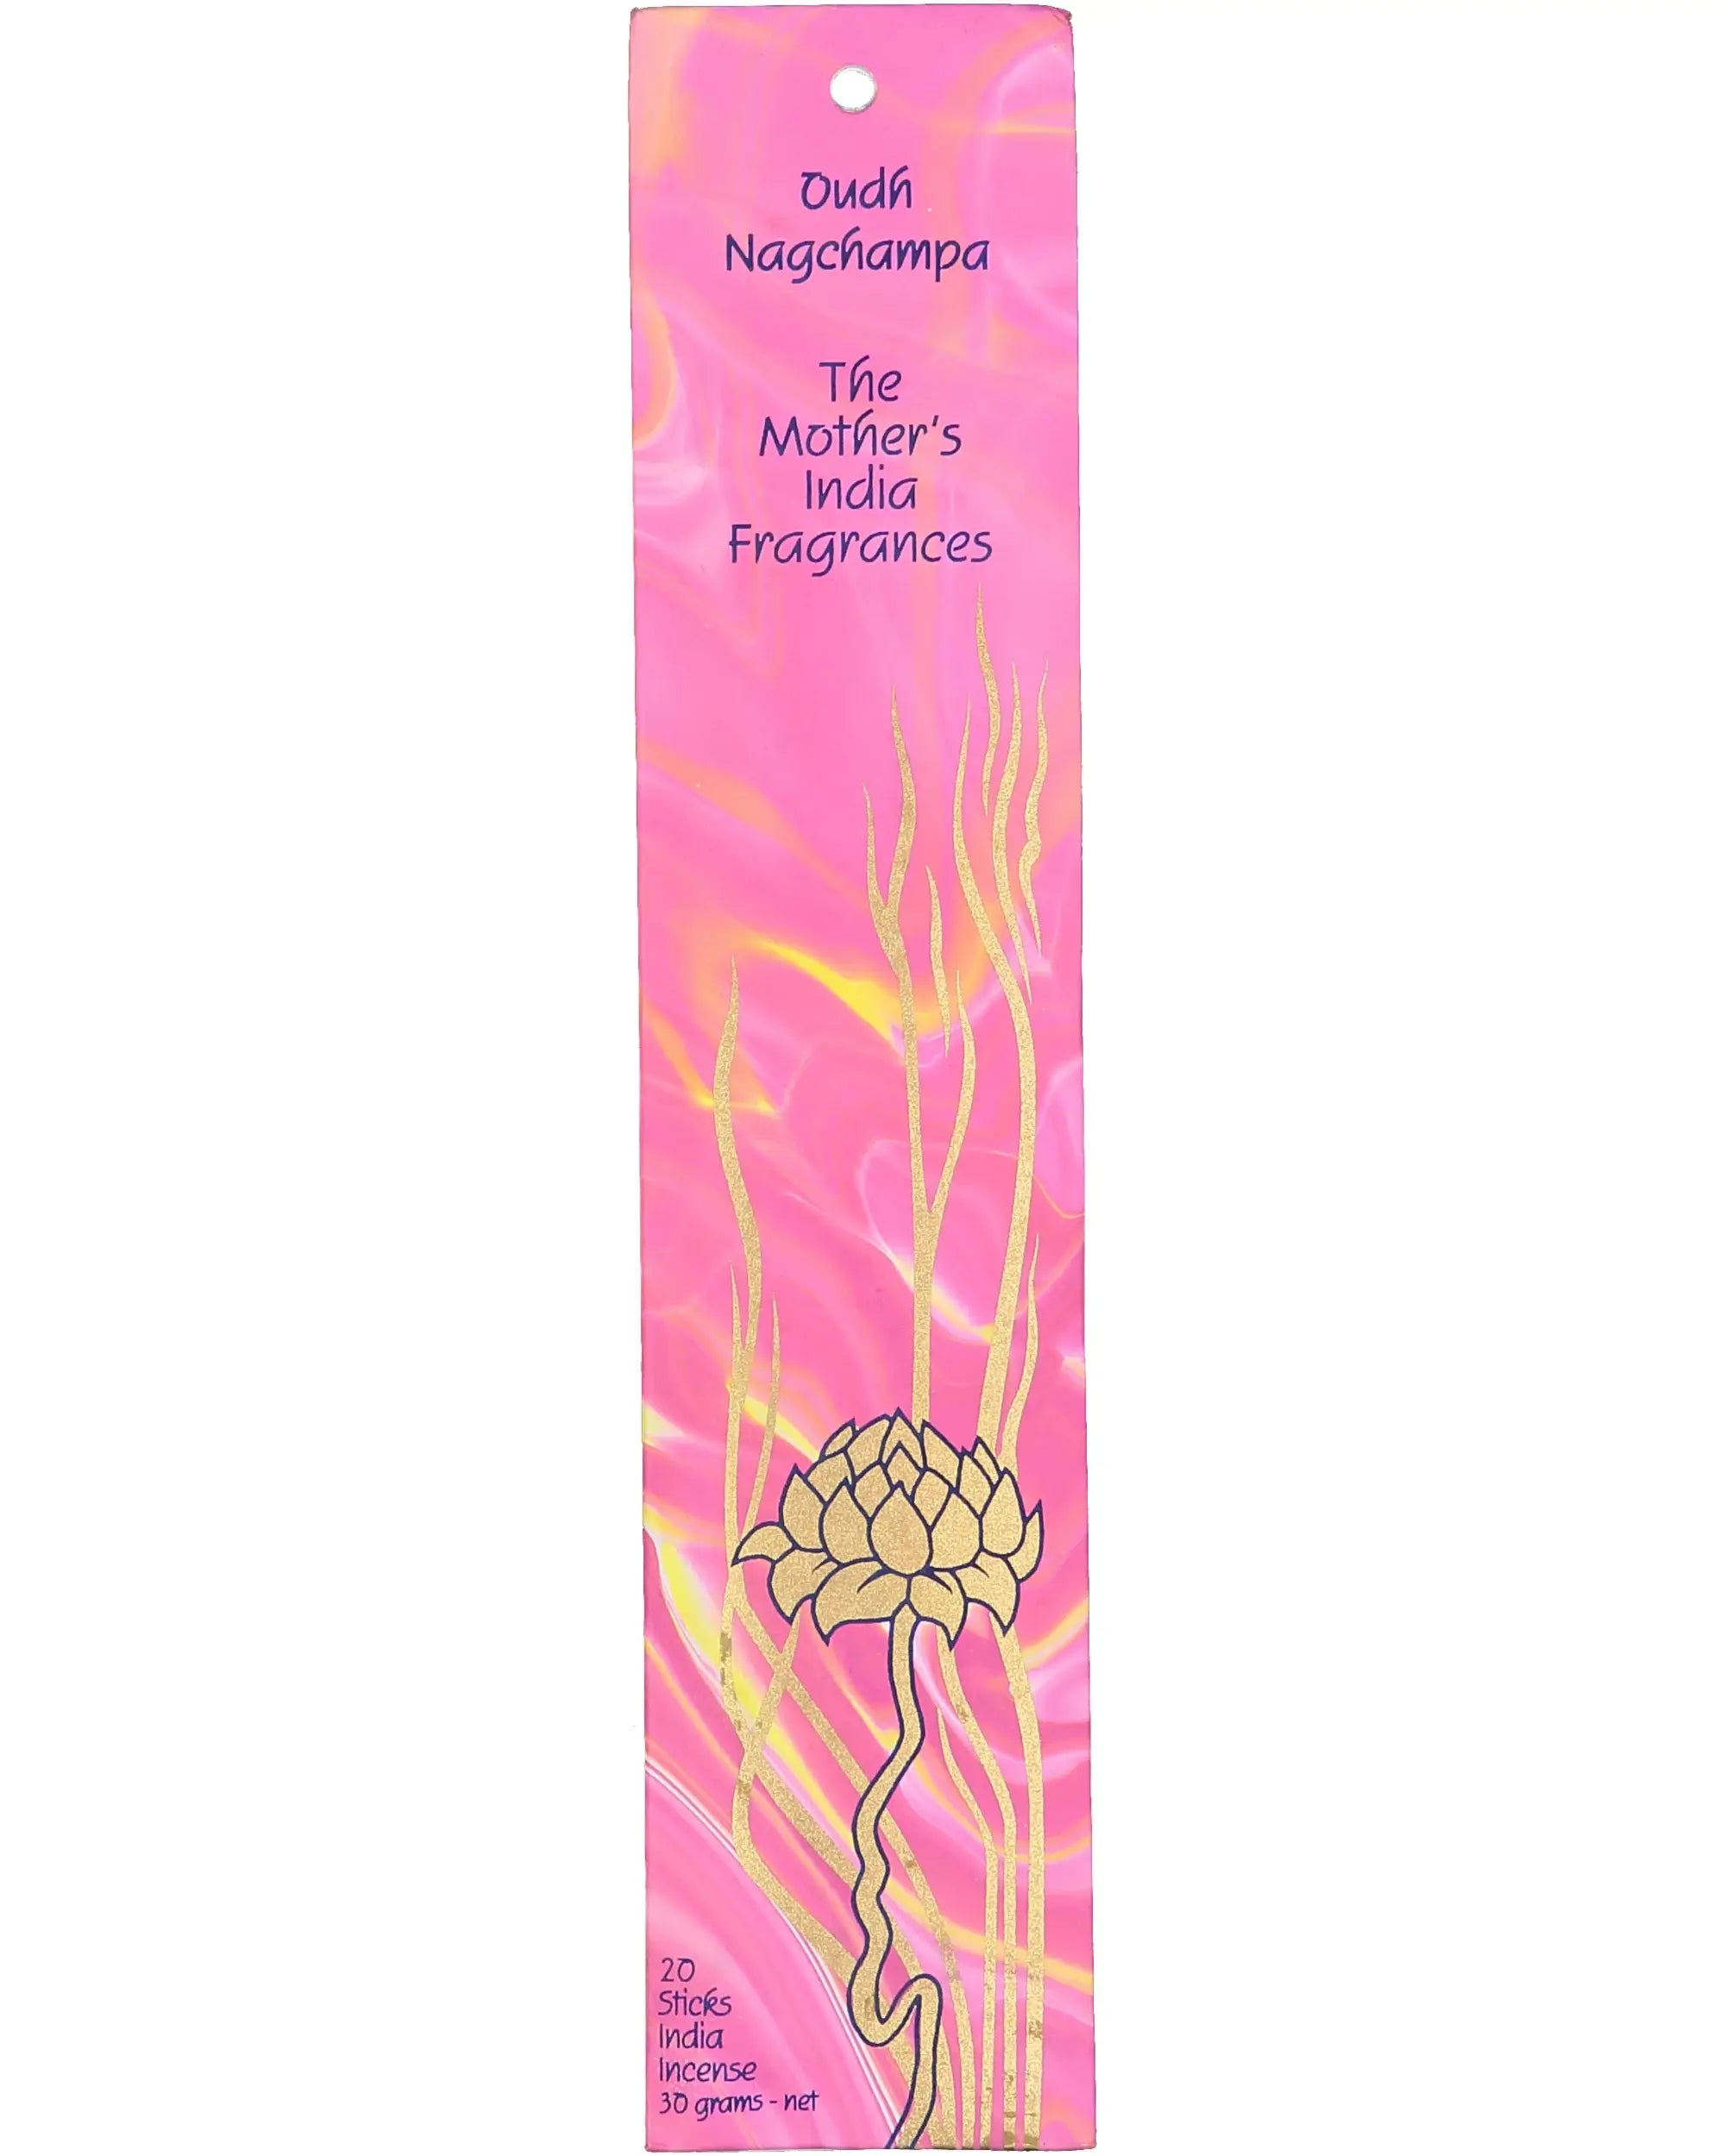 Oudh Nagchampa Real Incense by The Mother's India Fragrances Tantrika Australia